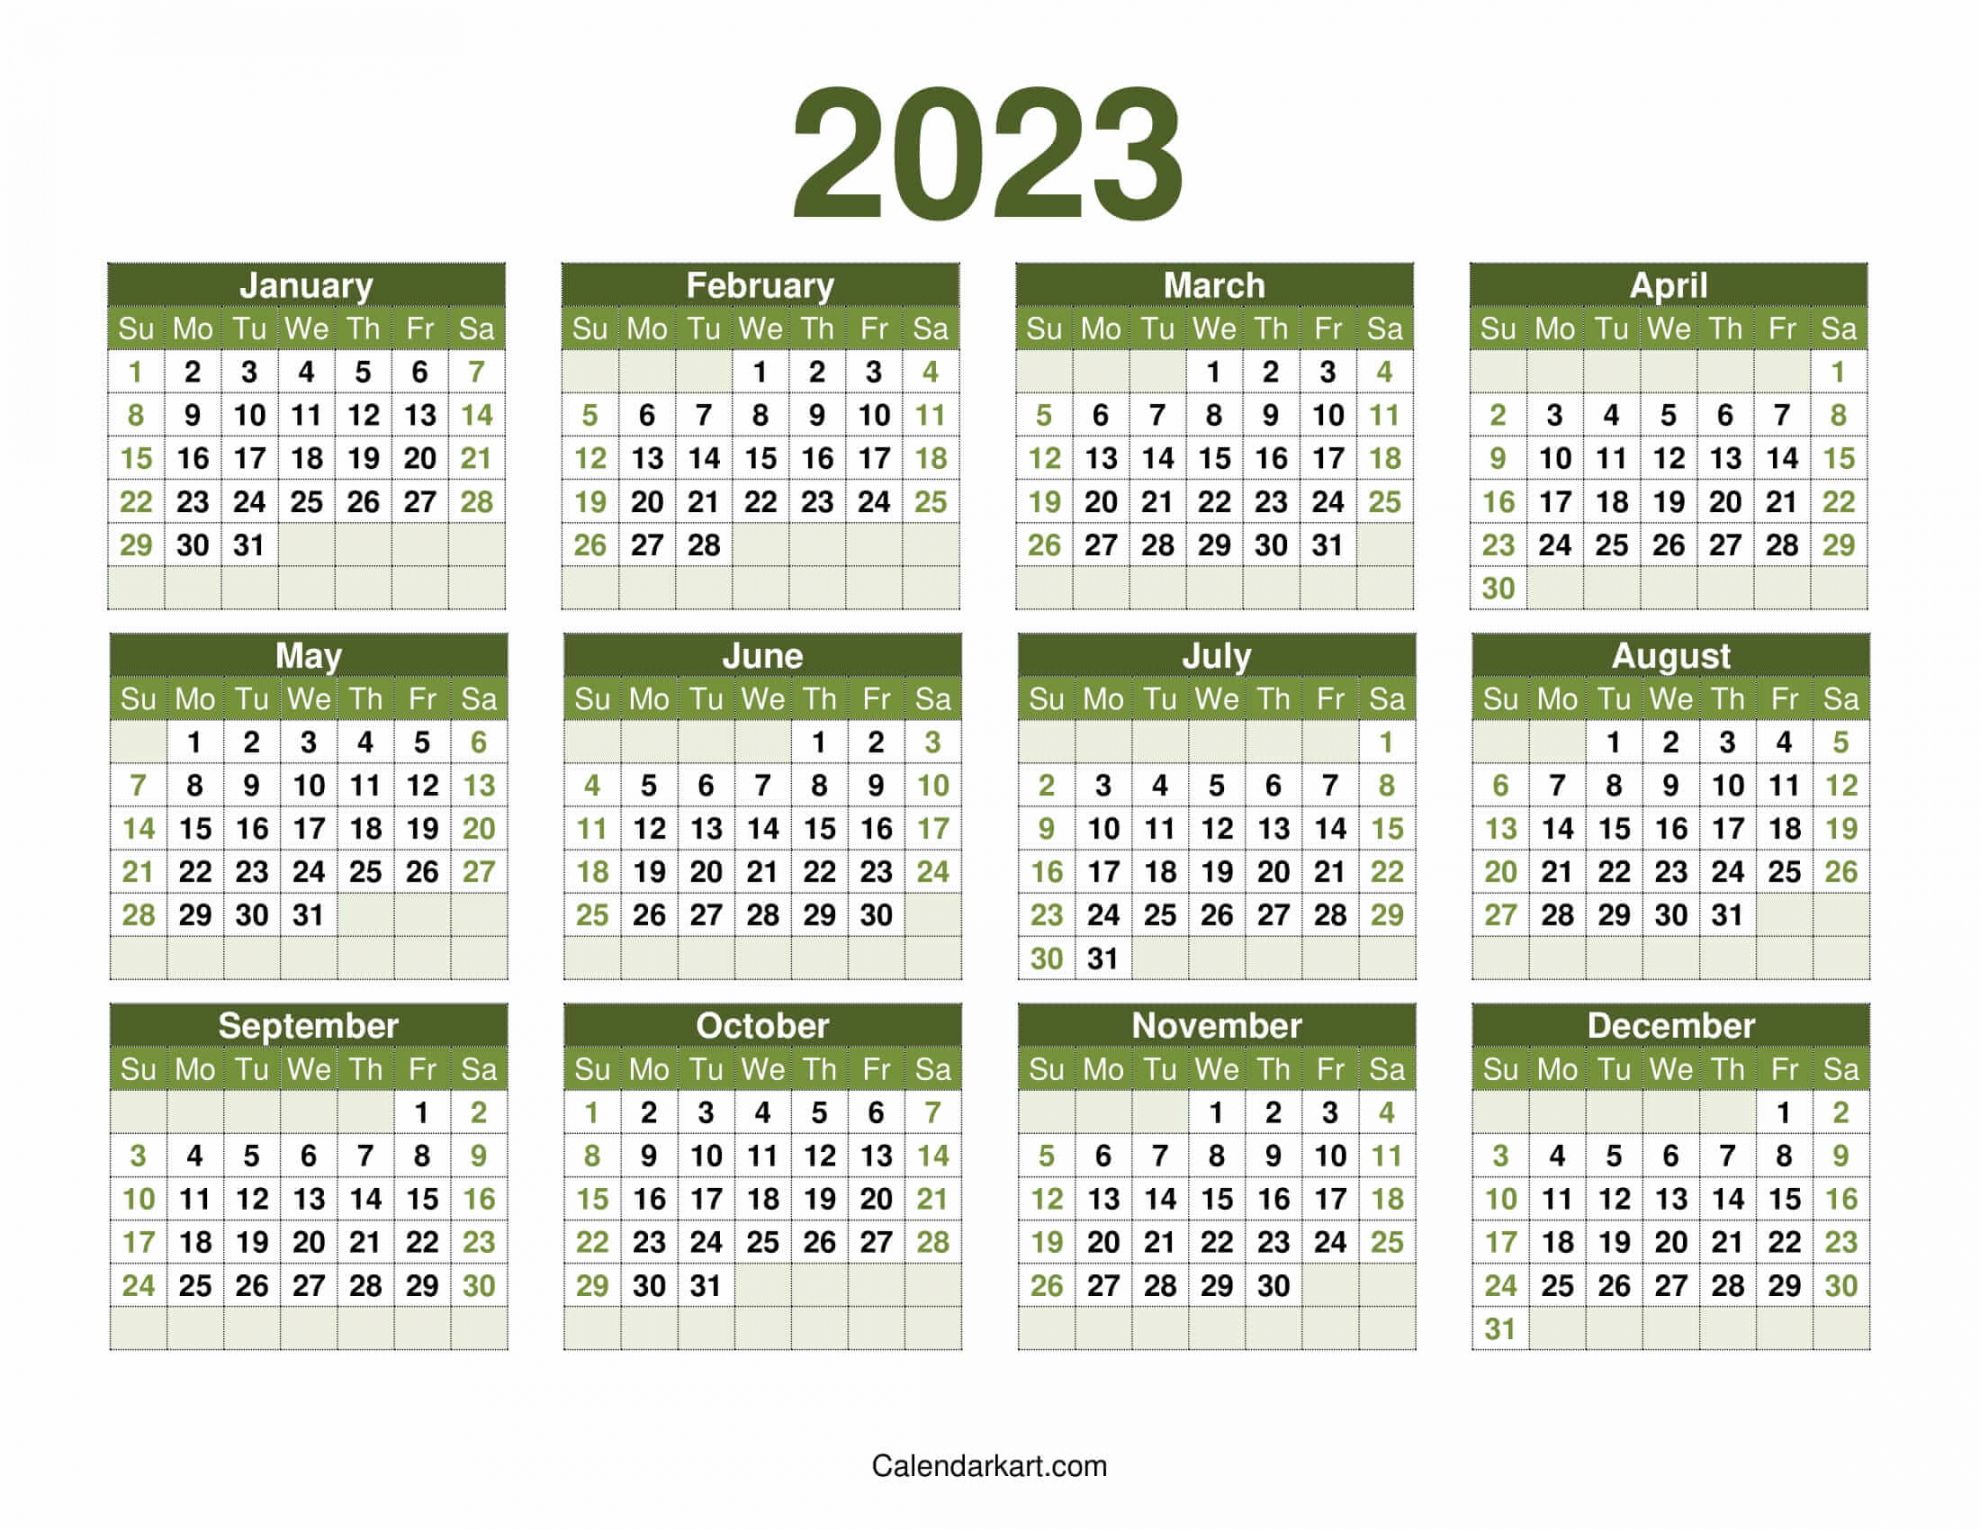 Free Printable Year At A Glance Calendar  - CalendarKart - FREE Printables - Year At A Glance Calendar 2023 Free Printable